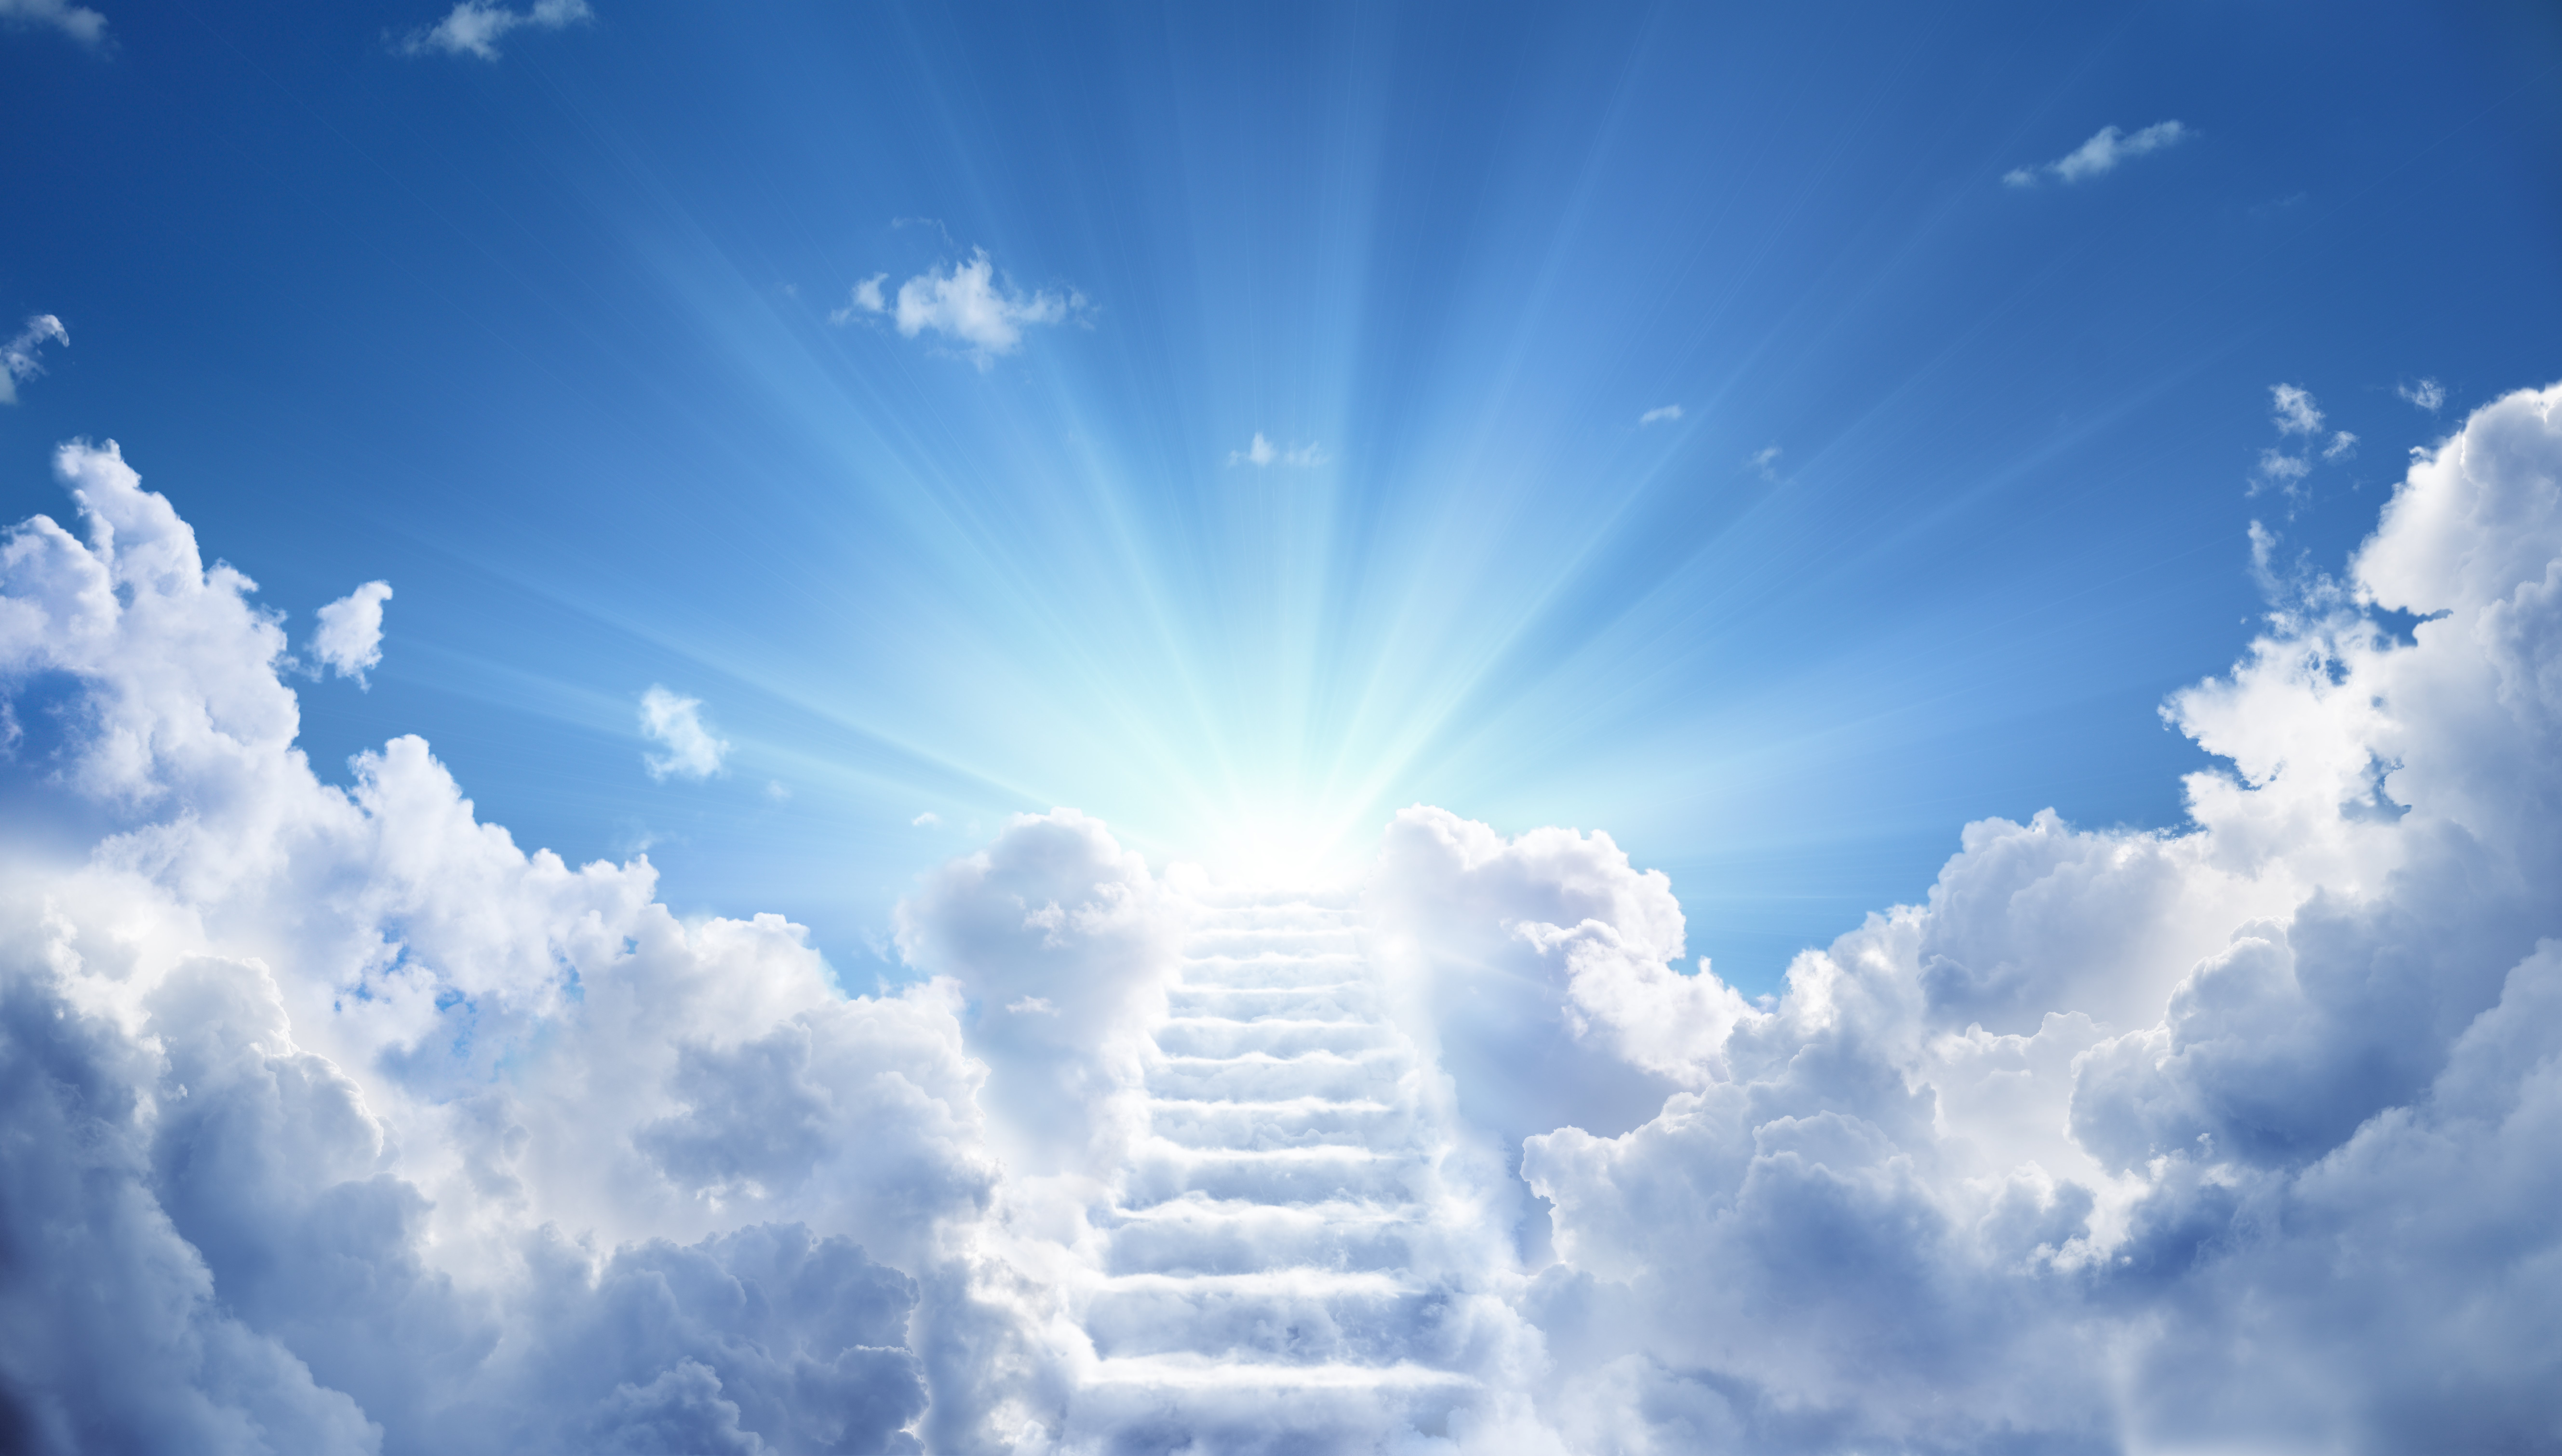 Clouds making a stairway in heaven | Photo: Shutterstock